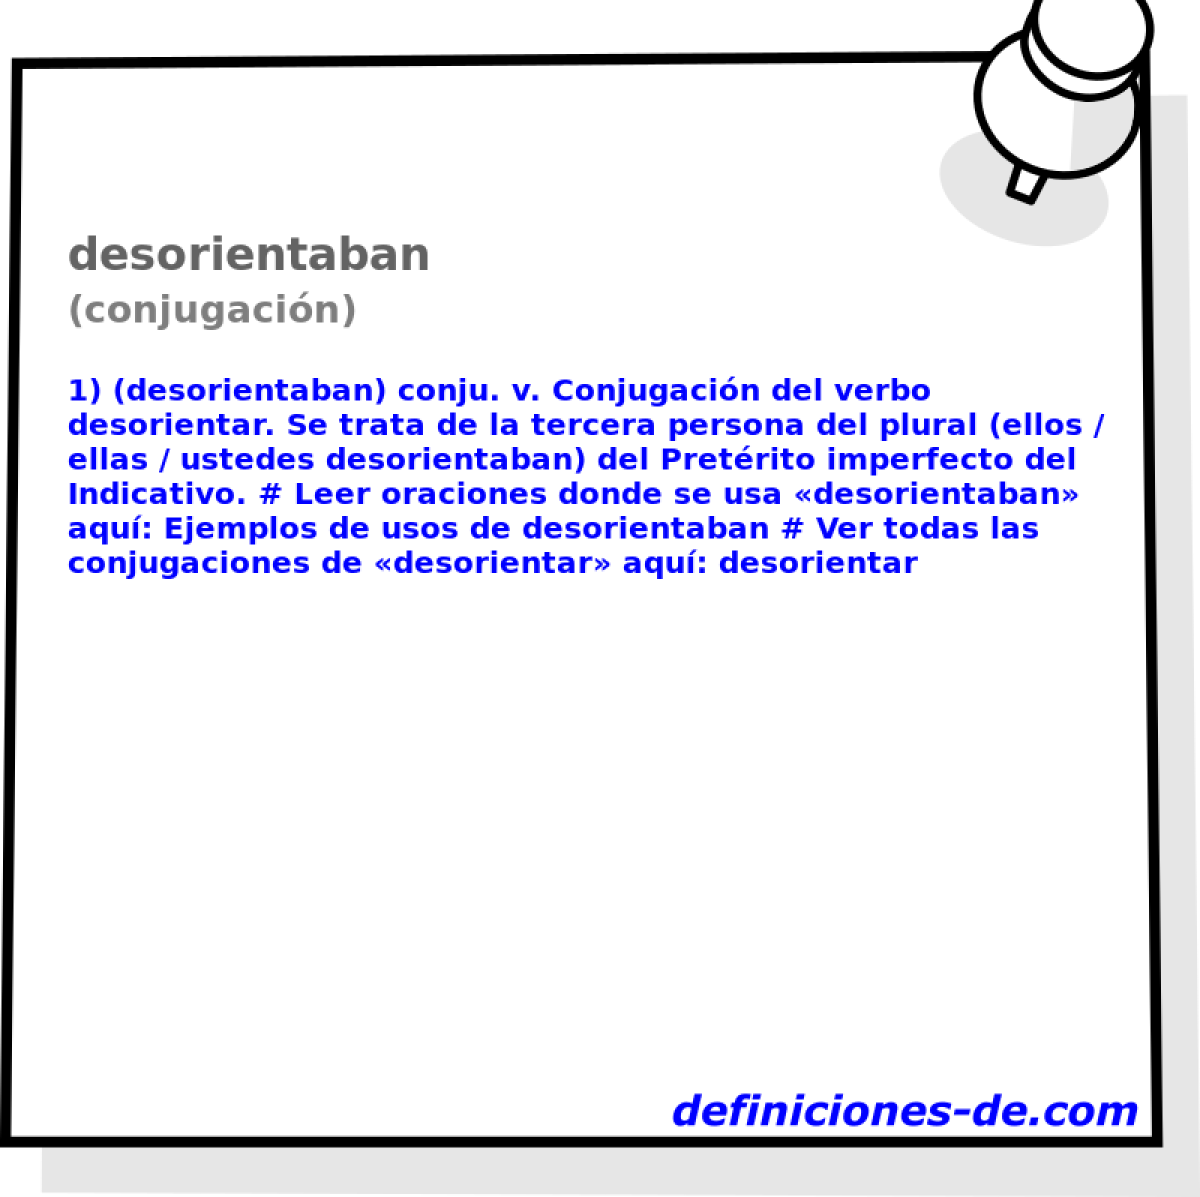 desorientaban (conjugacin)